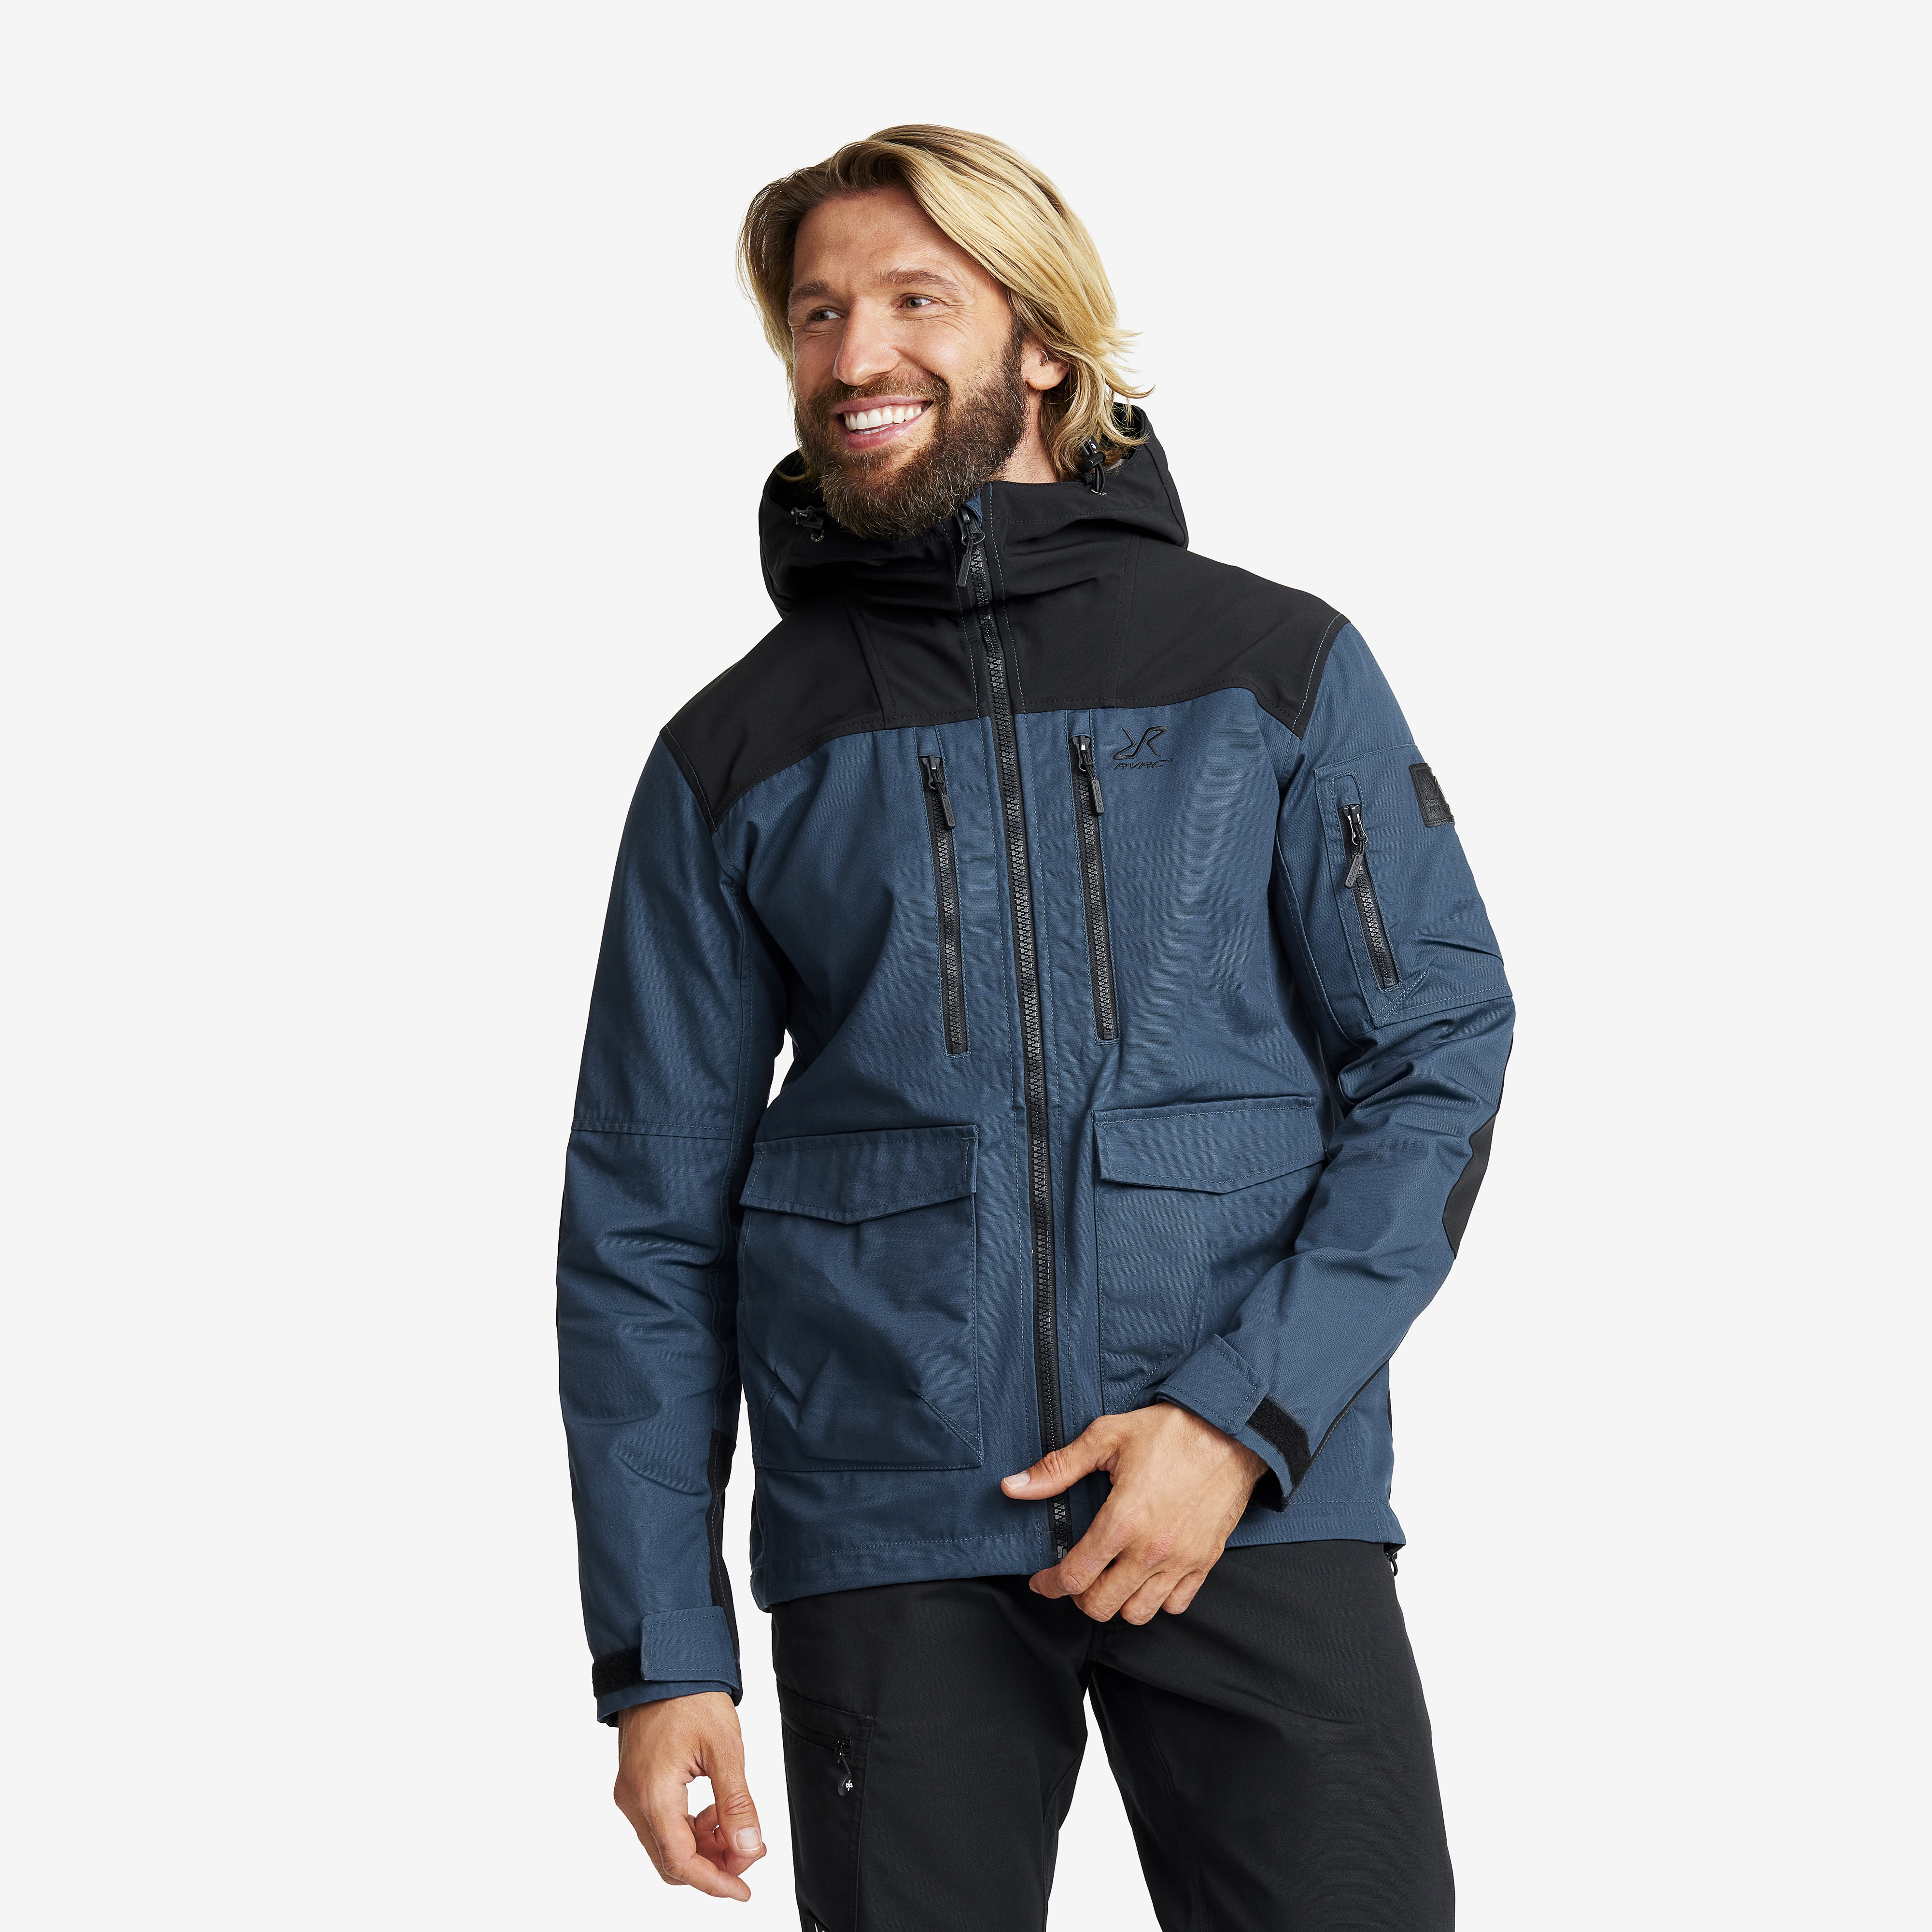 Outdoor Jacket – Herr – Moonlit Ocean Storlek:2XL – Skaljacka & Vindjacka